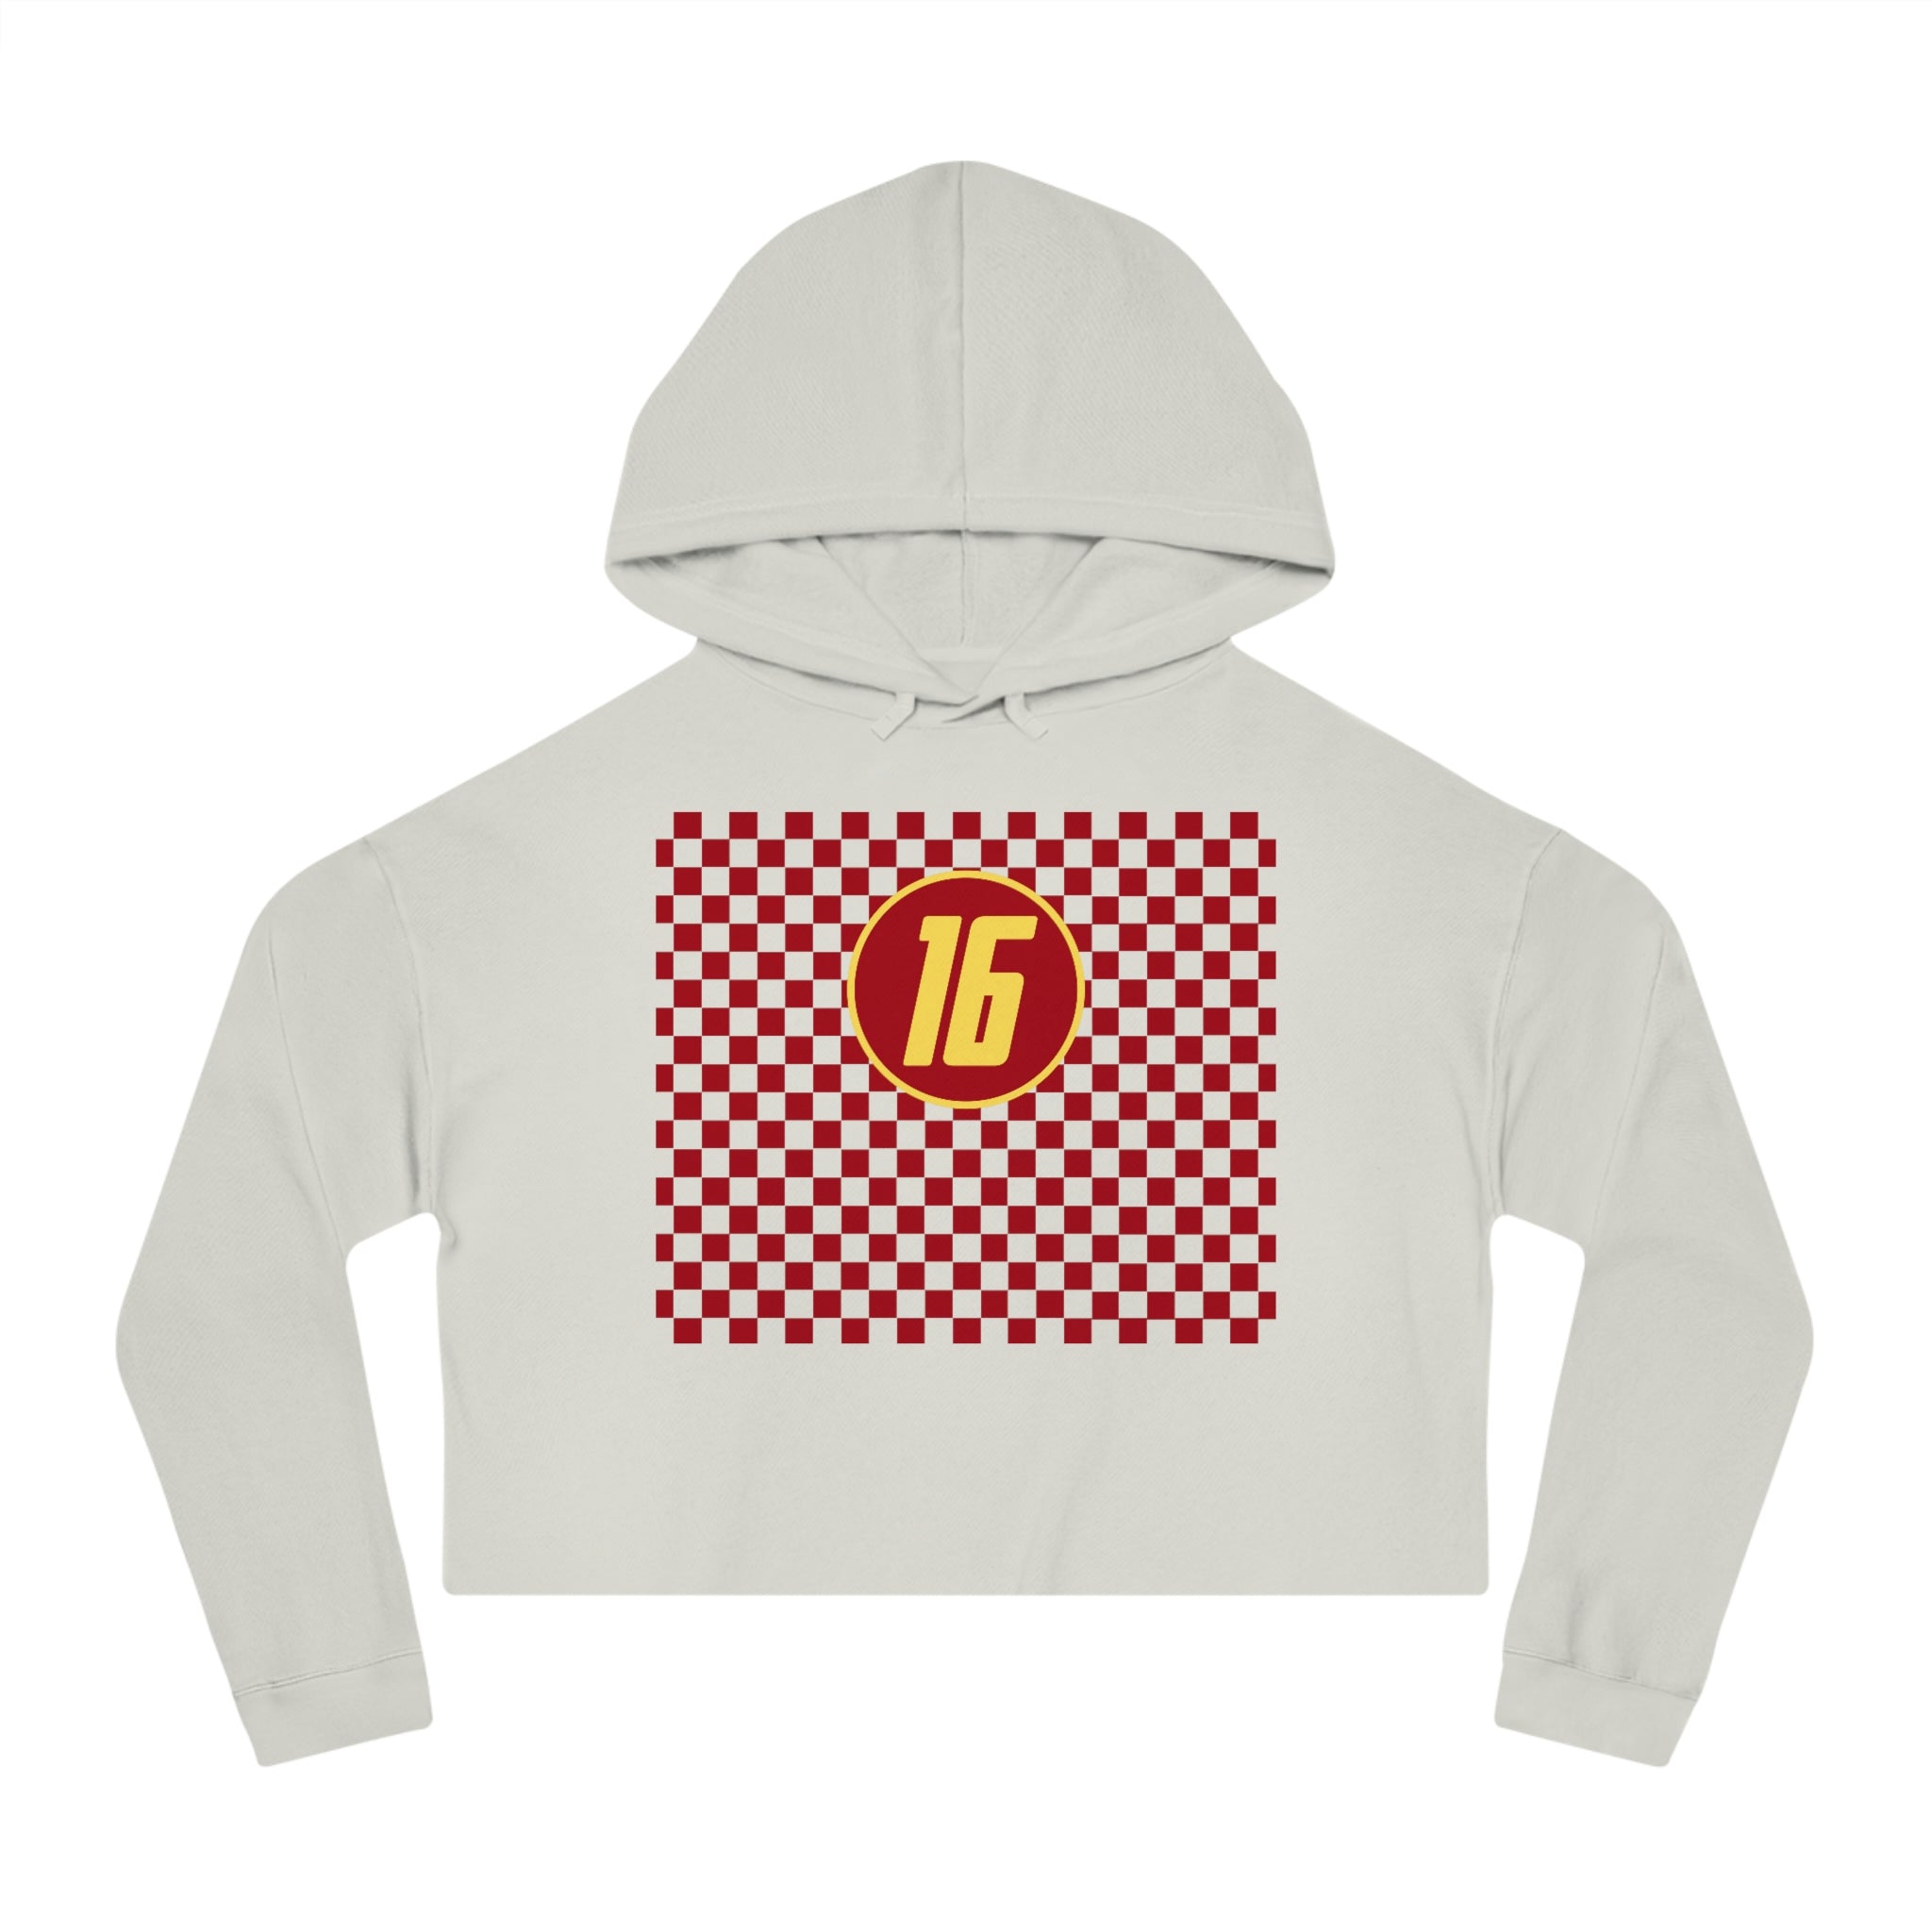 Checkered "16" Women’s Cropped Hooded Sweatshirt - FormulaFanatics